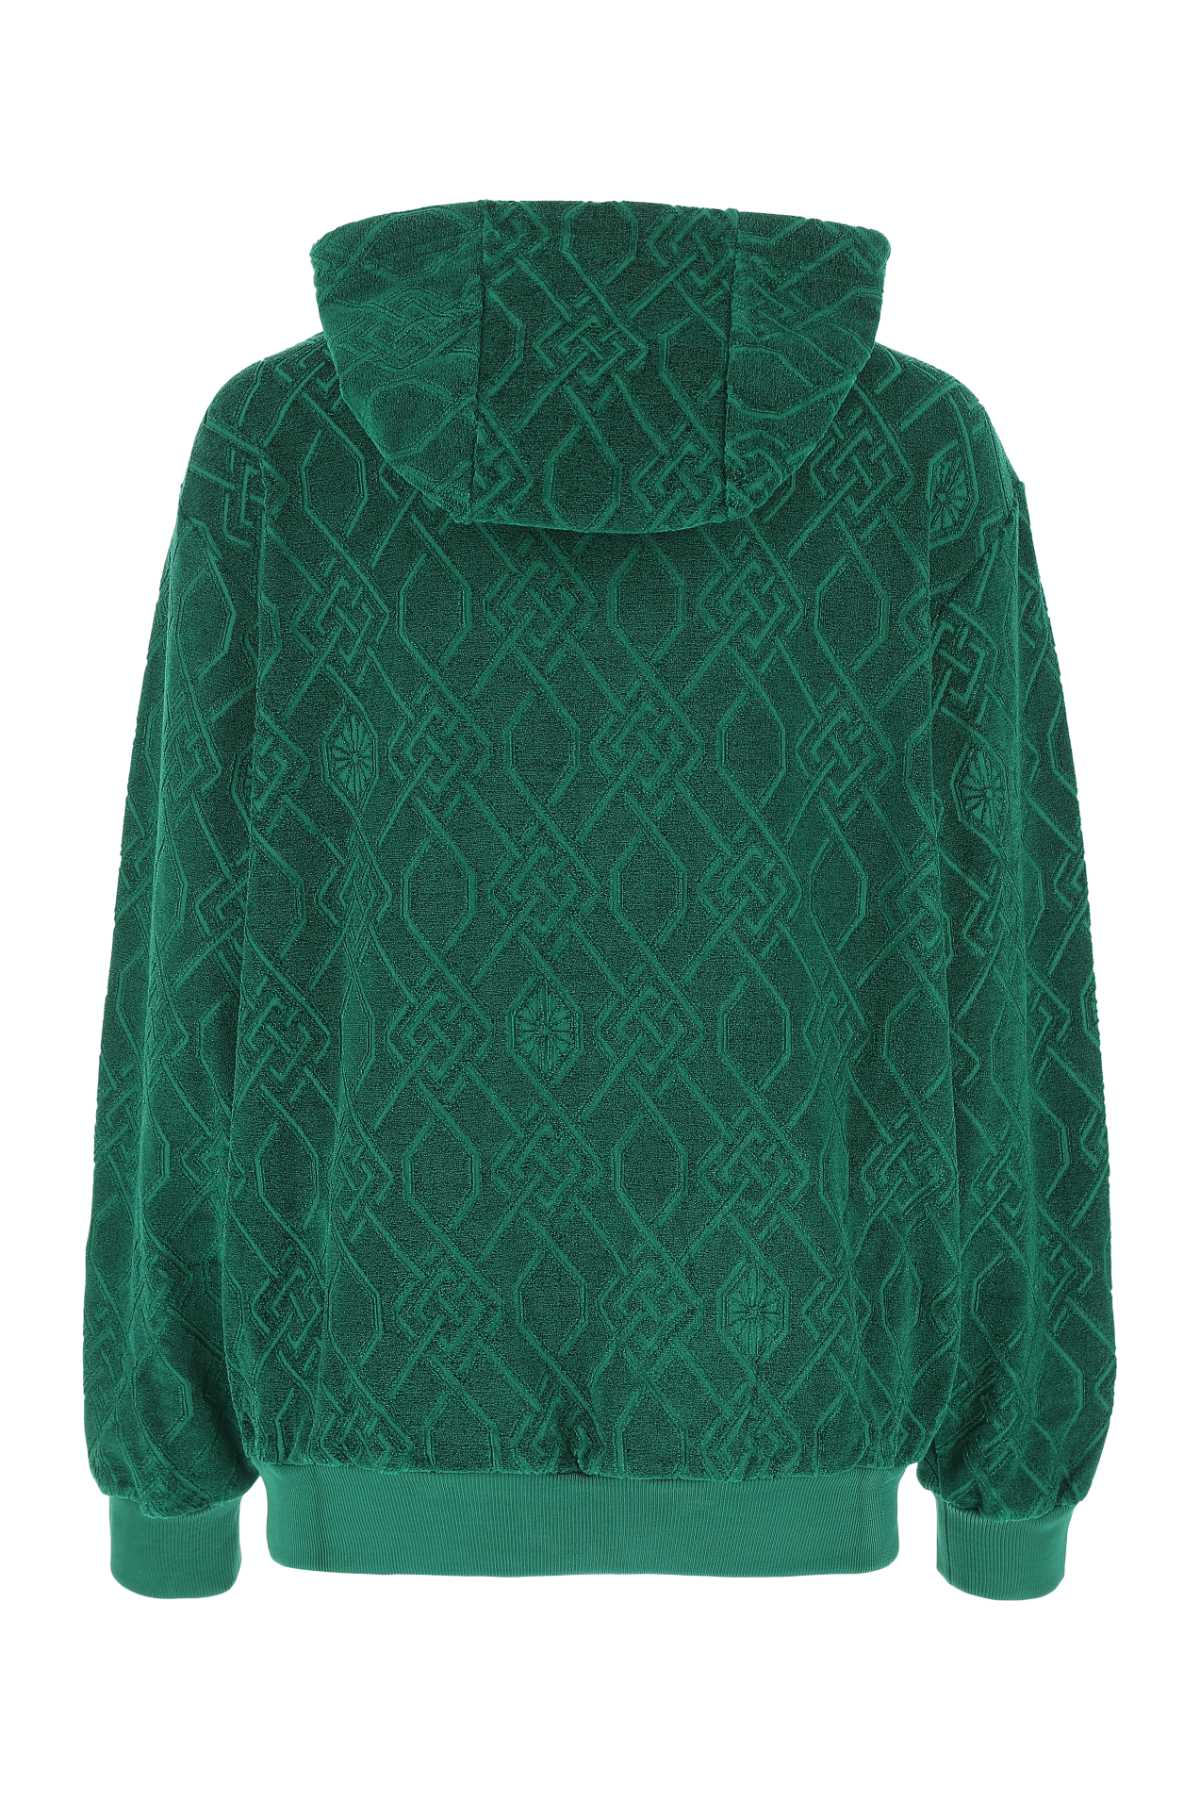 Koché Dark Green Terry Fabric Oversize Sweatshirt In 661j